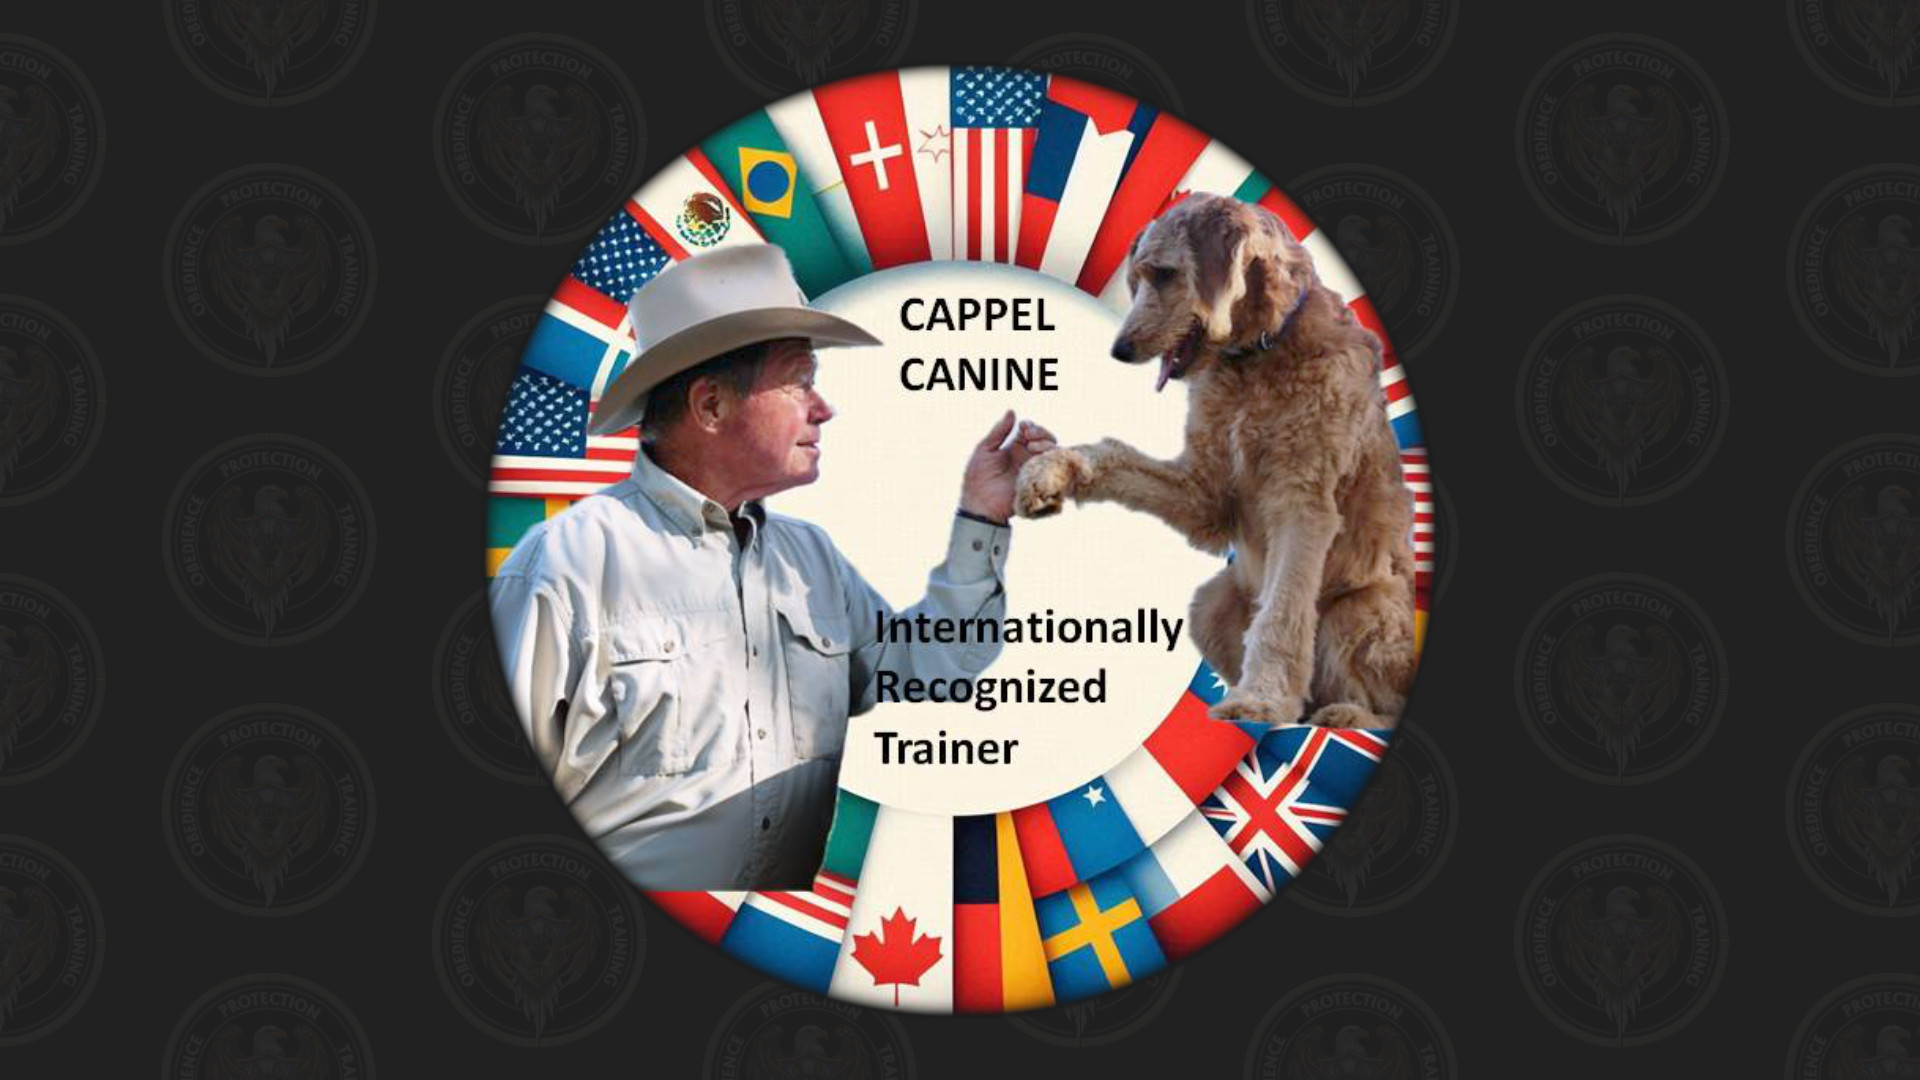 Internationally Recognizeed Dog Trainer Butch Cappel